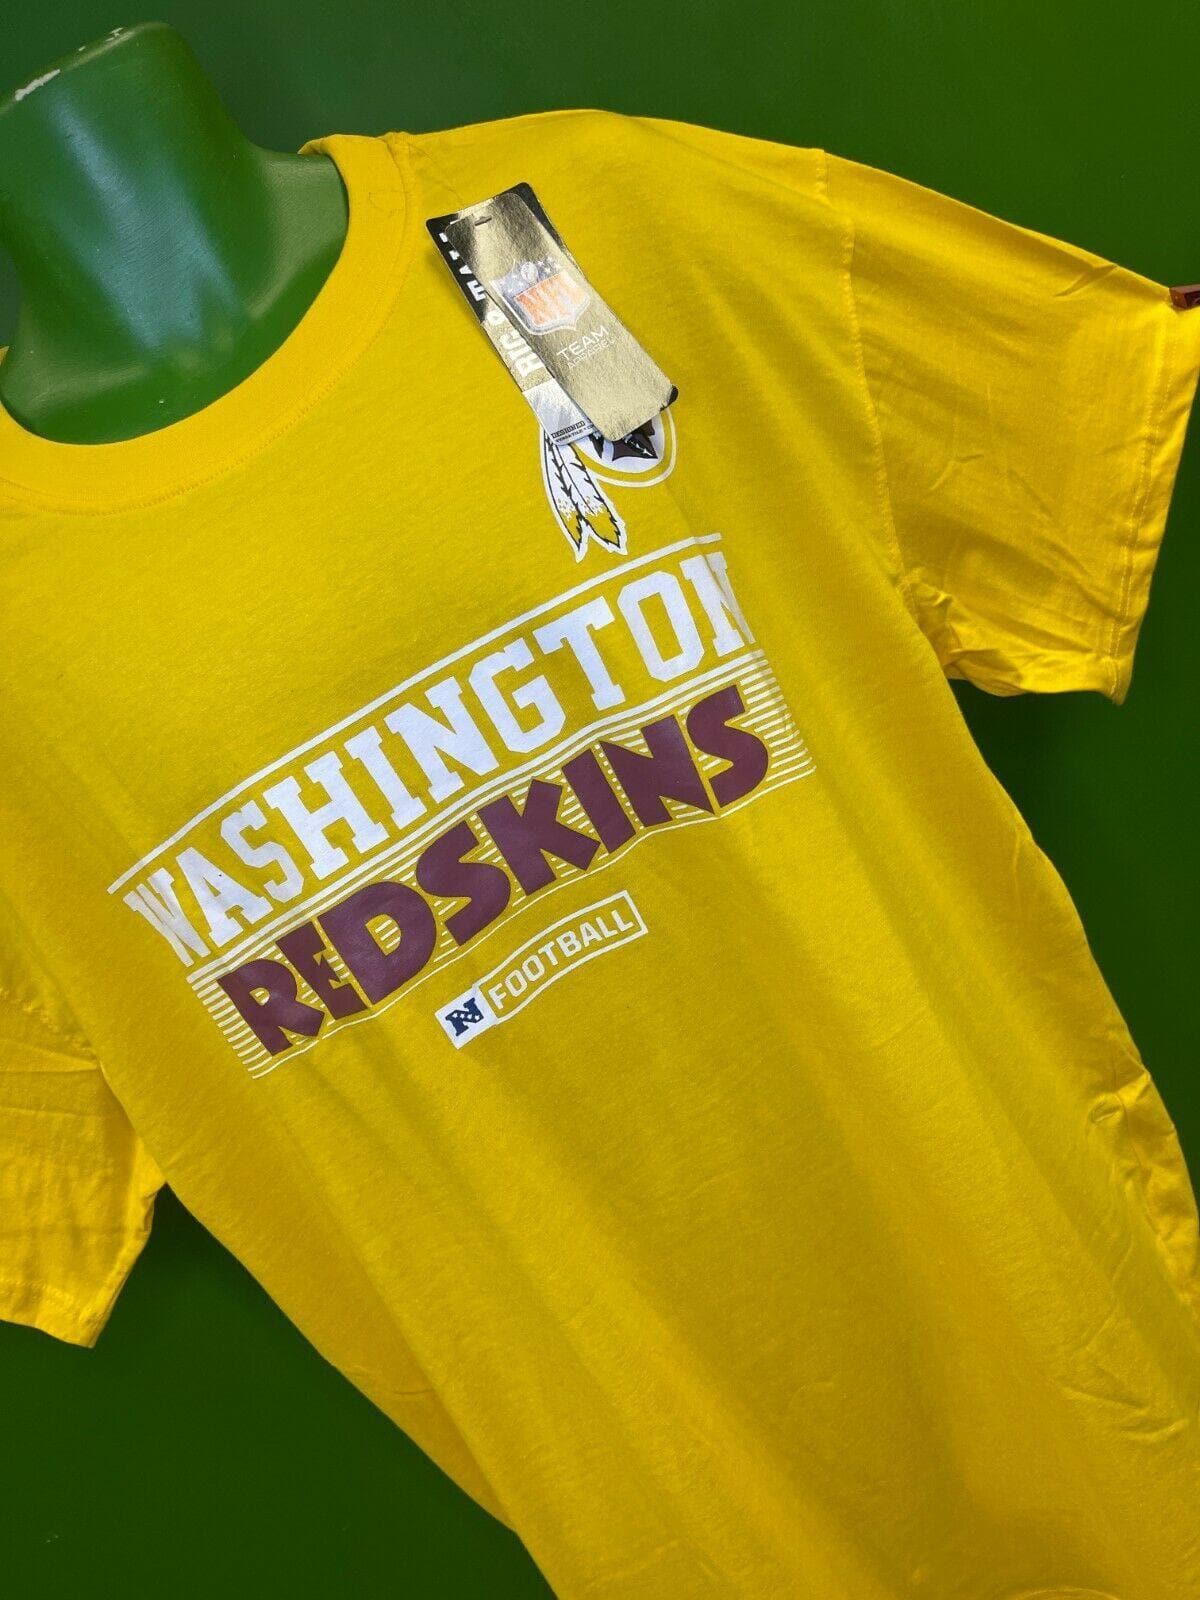 NFL Washington Commanders (Redskins) T-Shirt Men's 4X-Large NWT